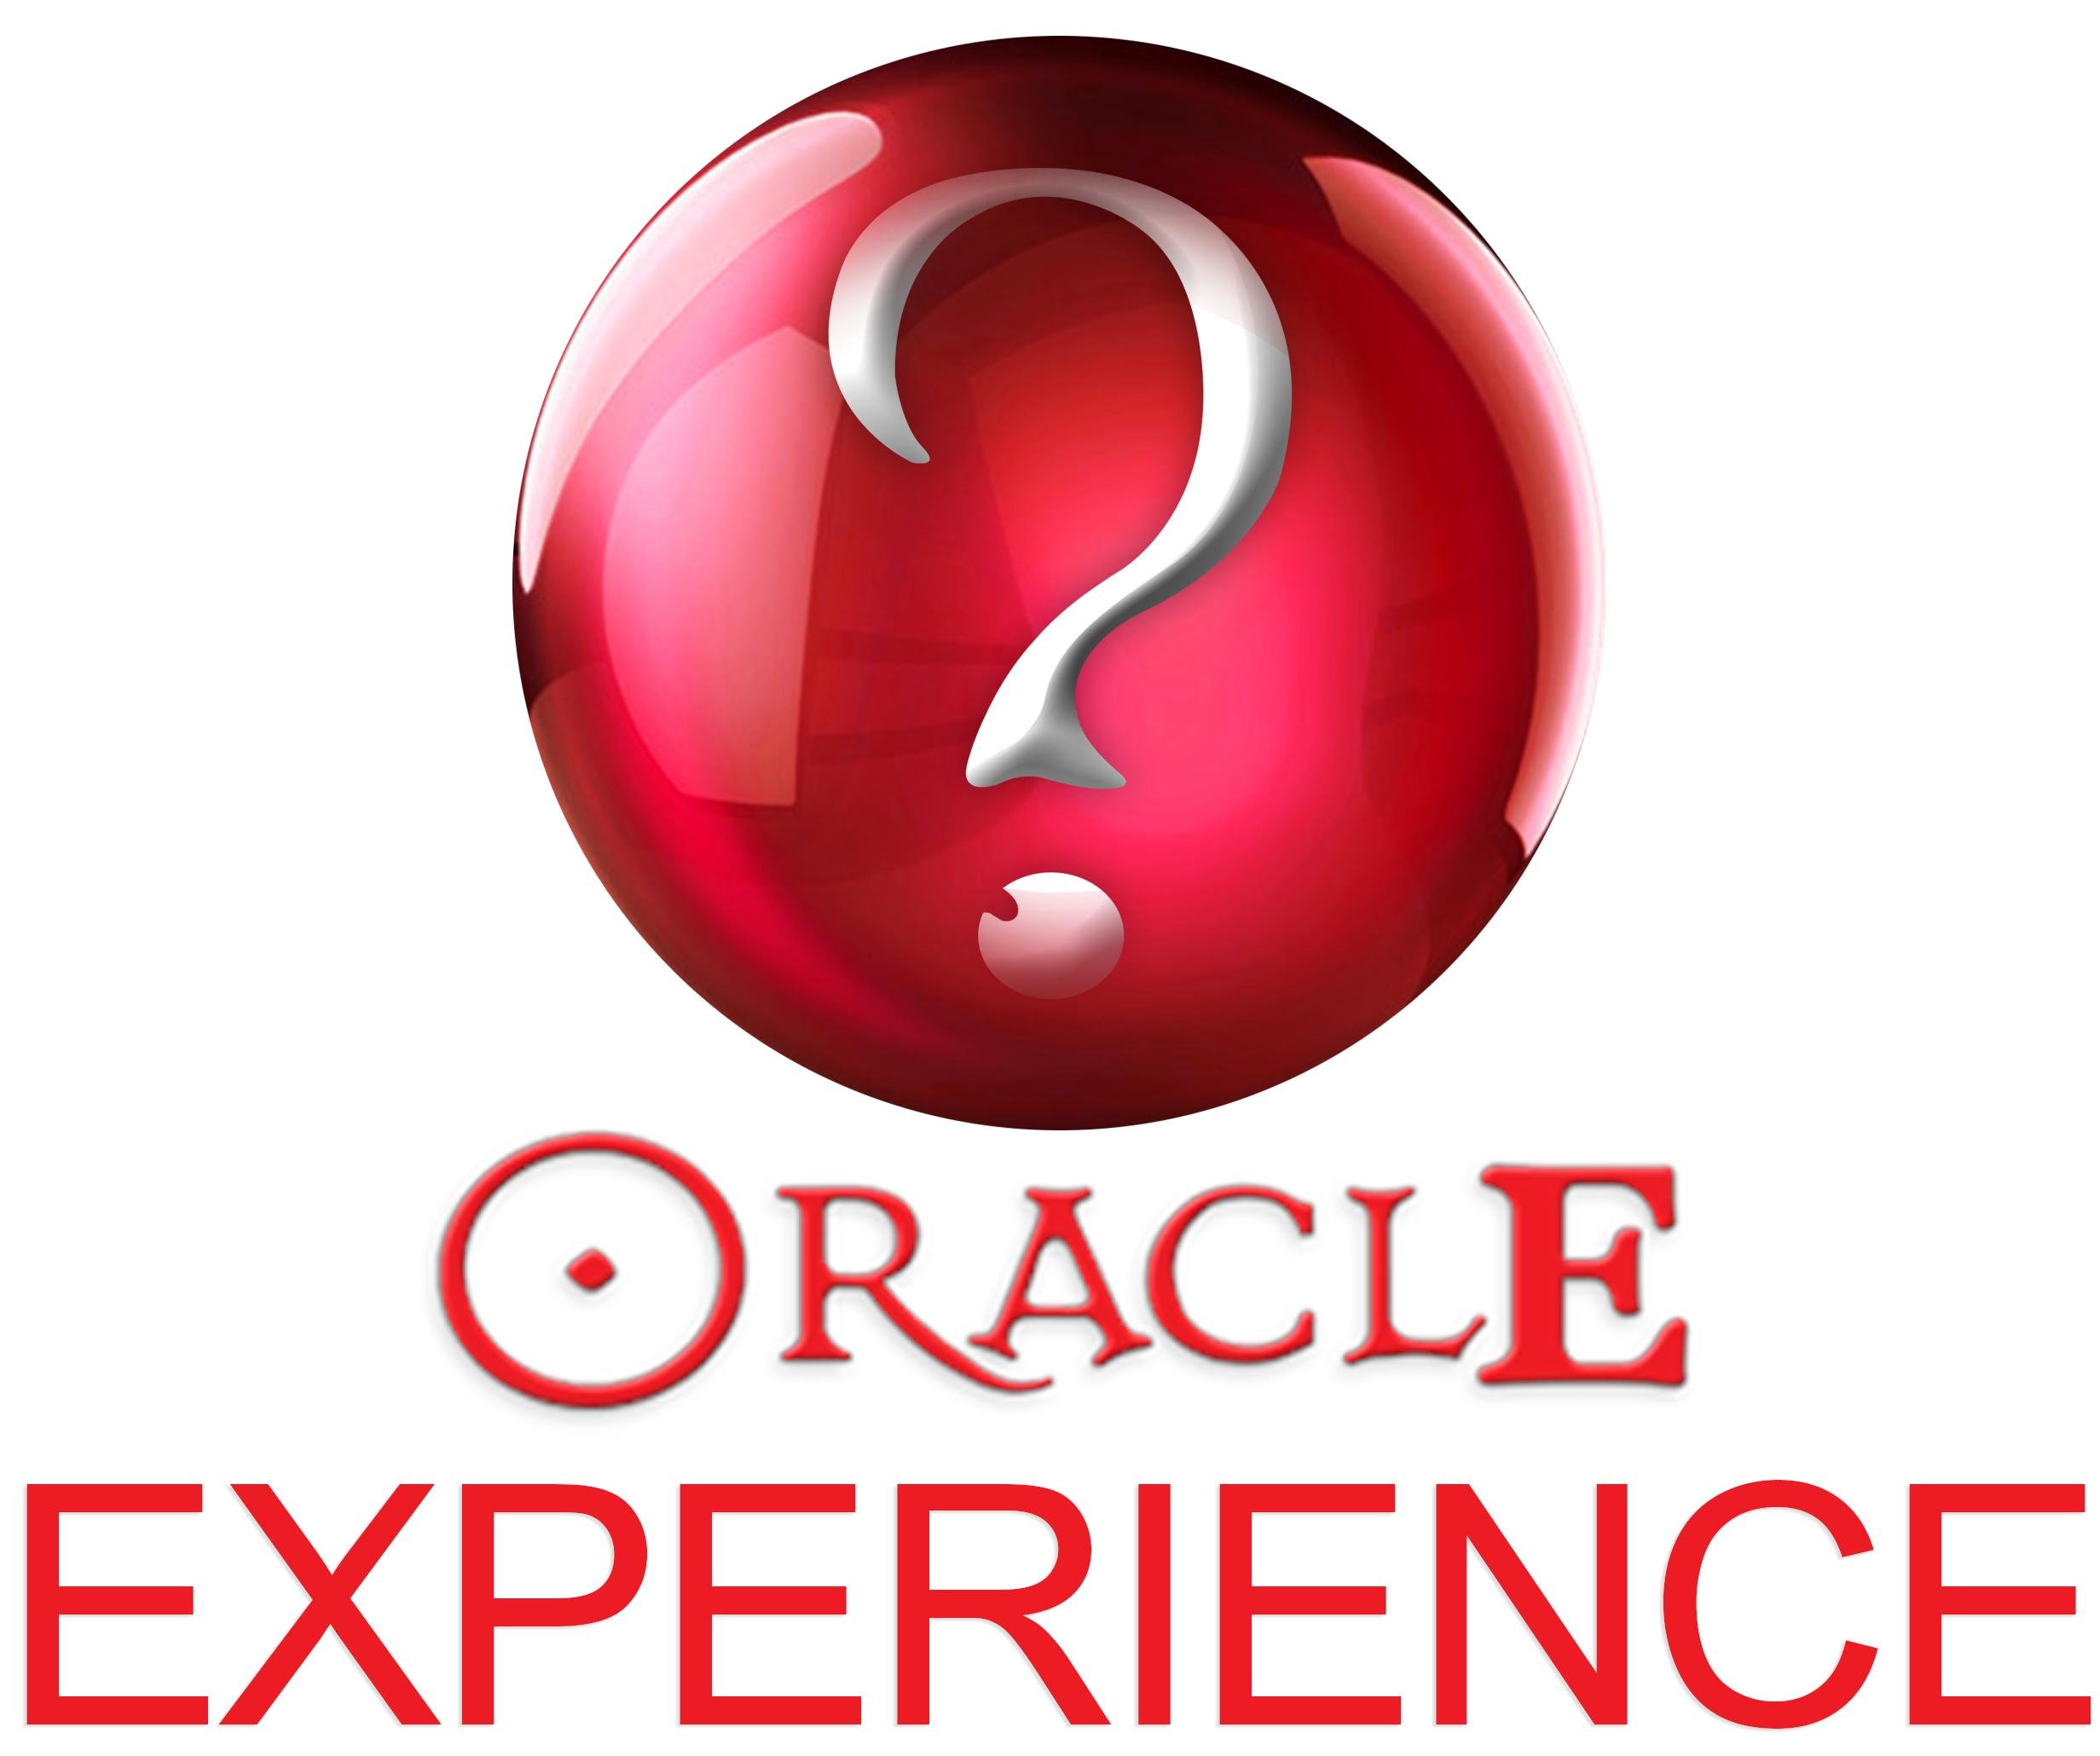 Oracleexperience